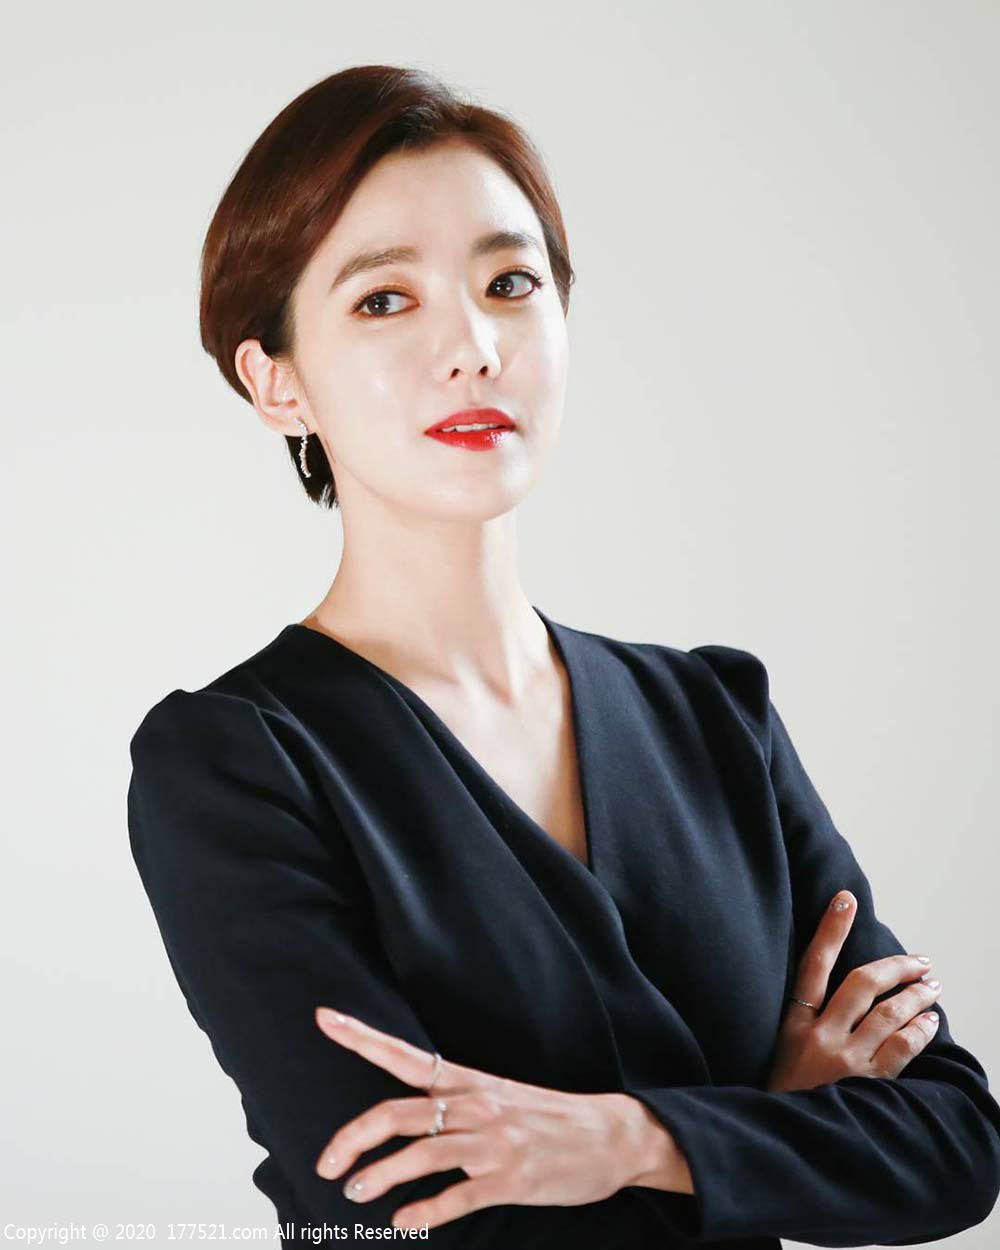 李素妍( 이소연, Lee So Yeon)人物介绍八卦新闻持续追踪